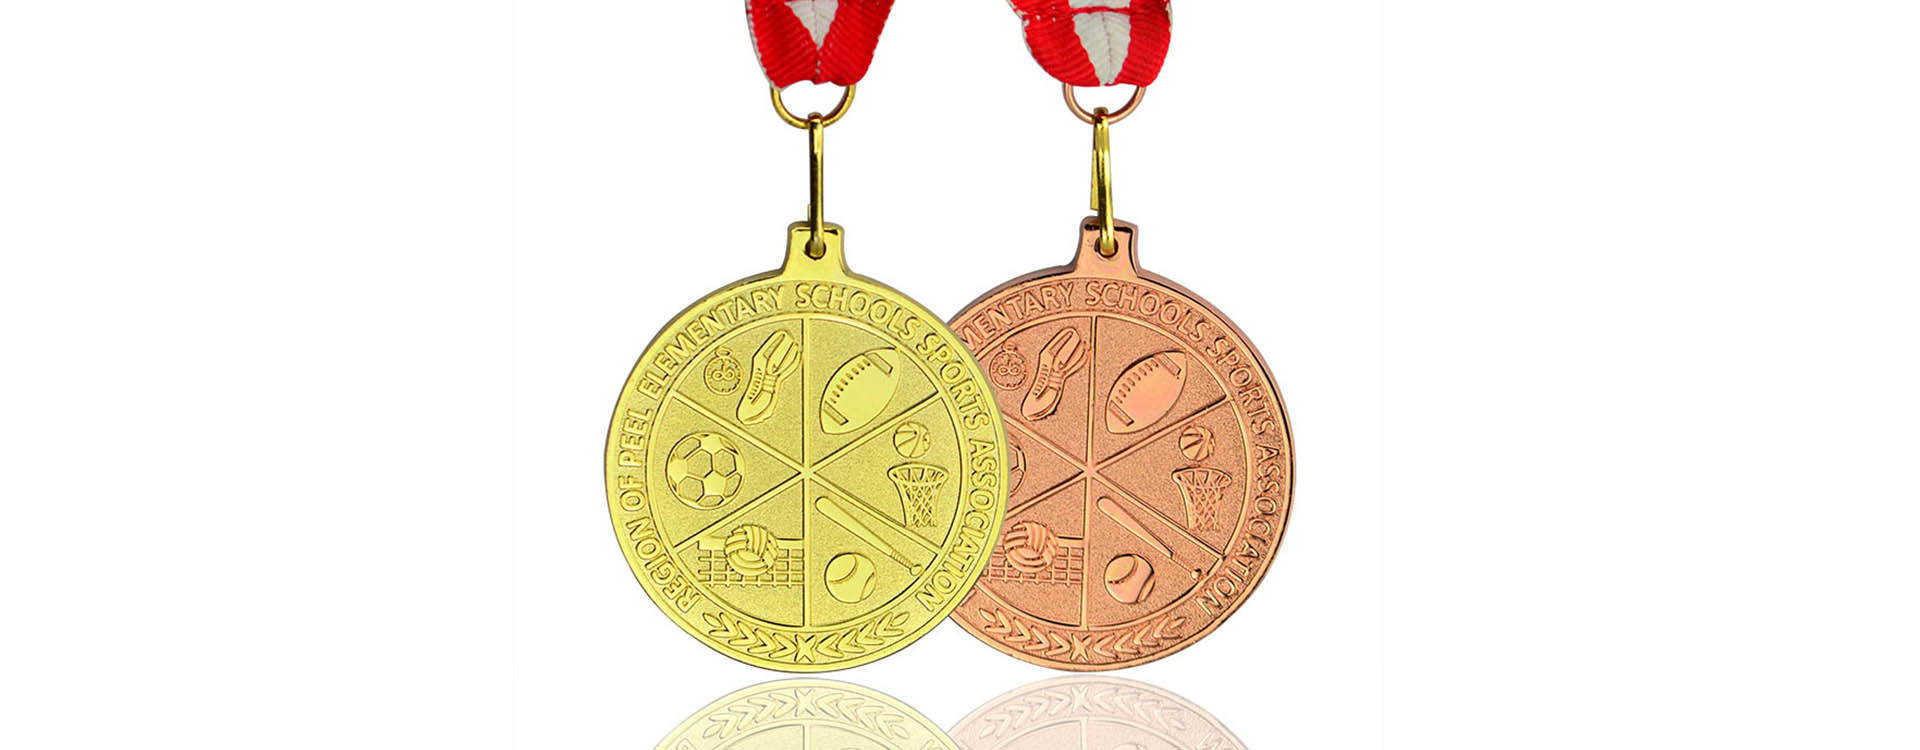  custom medals